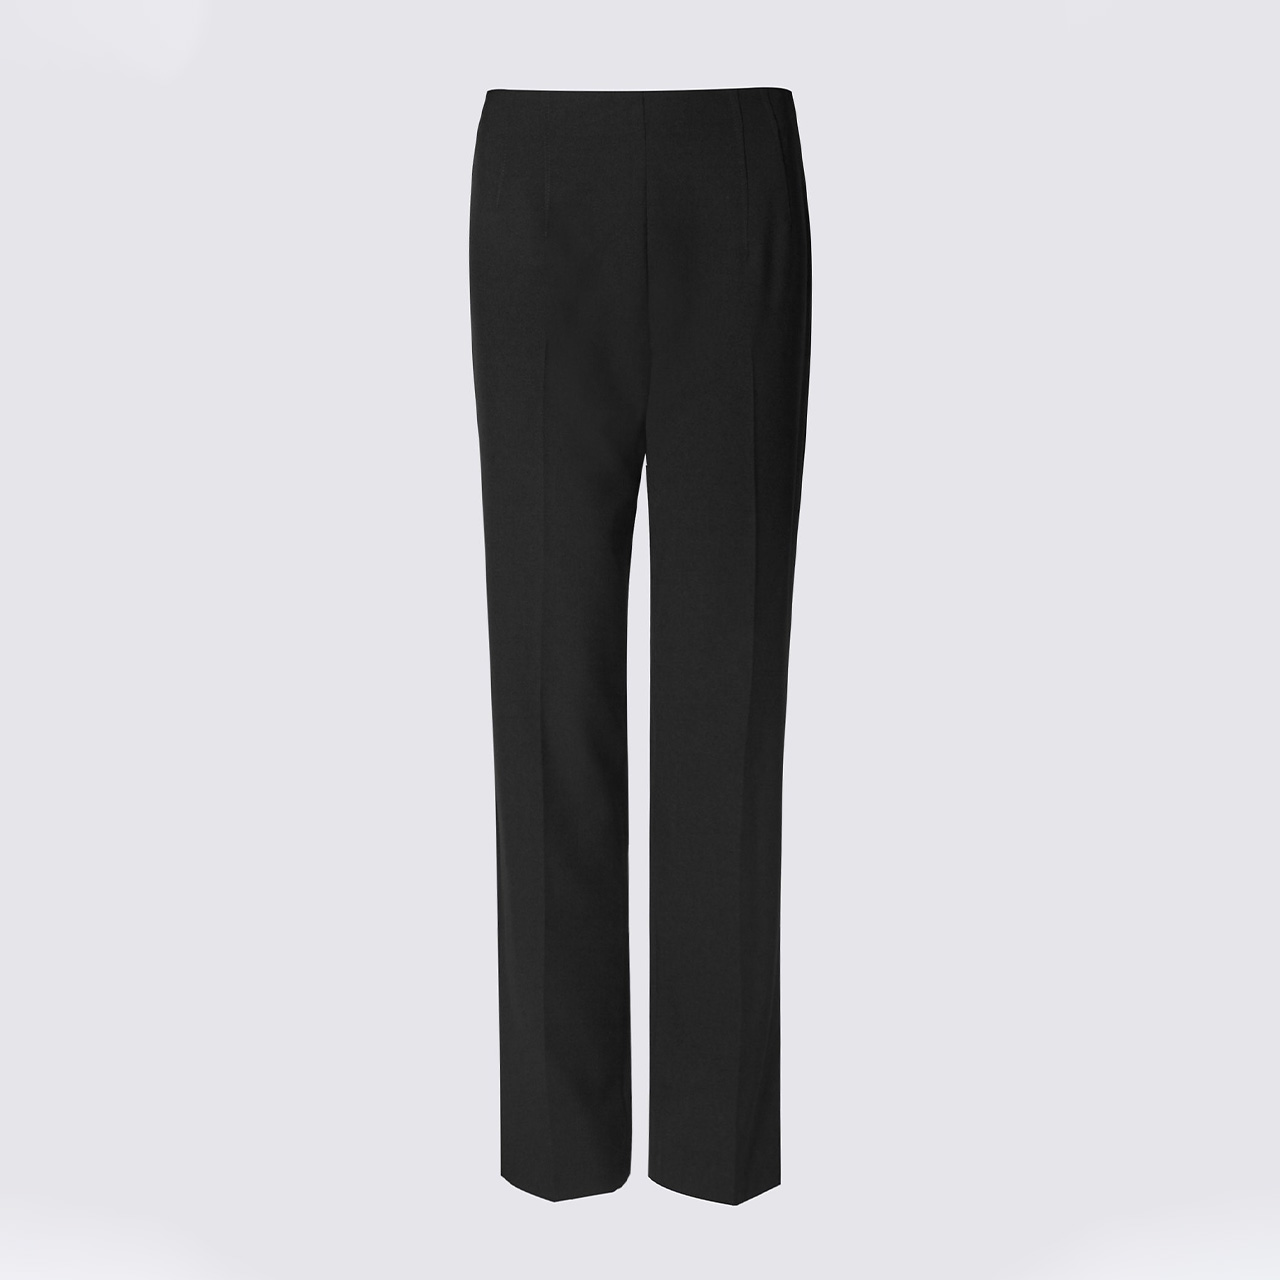 Womens Black Trousers Papaya Size 12 Polyester | eBay-anthinhphatland.vn